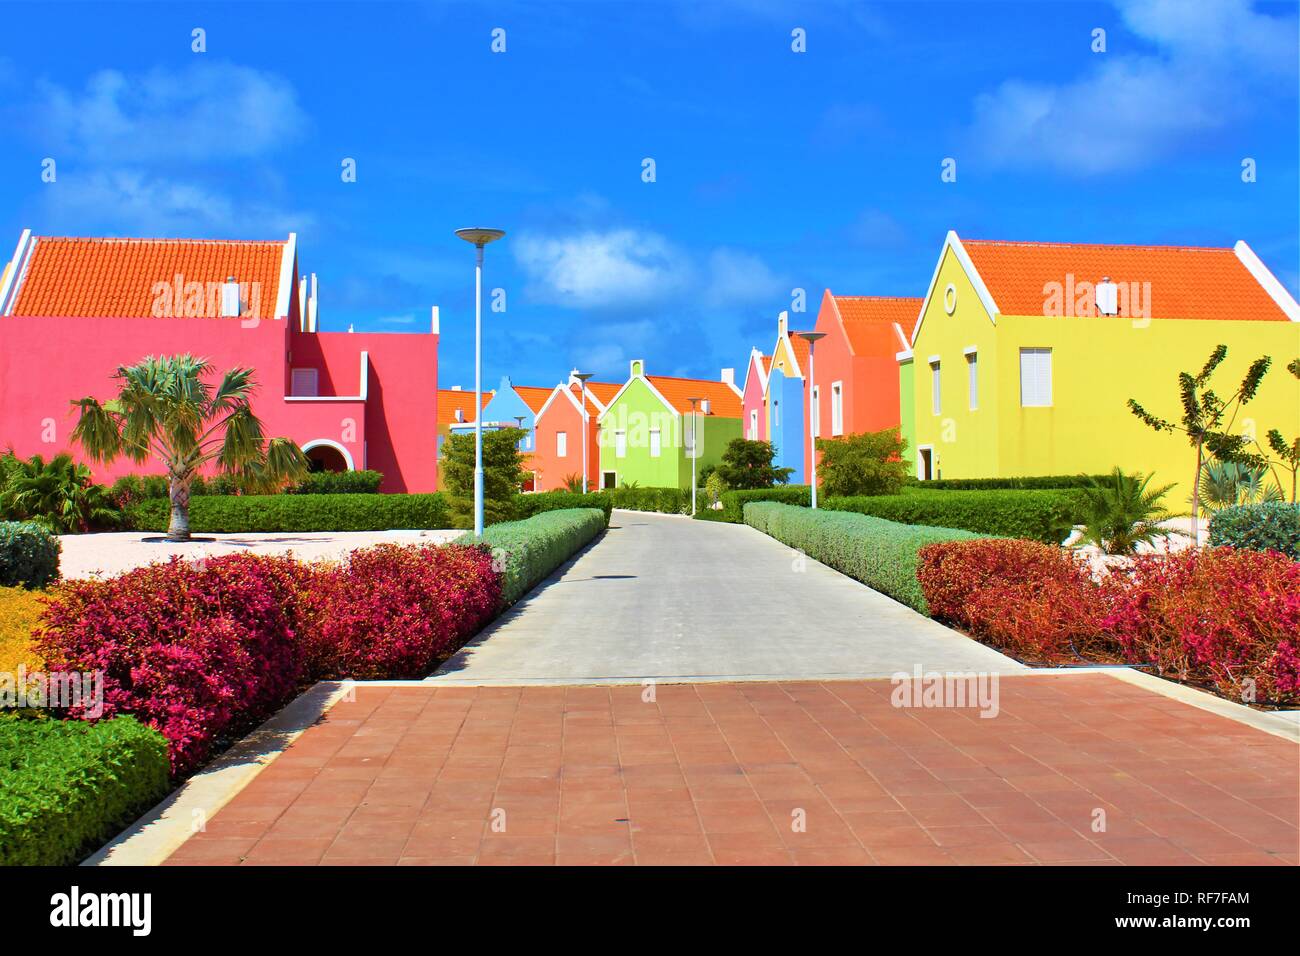 Kralendijk, Bonaire, Caribbean - February 22nd 2018: The colourful, newly built Courtyard Village tourist accommodation complex. Stock Photo